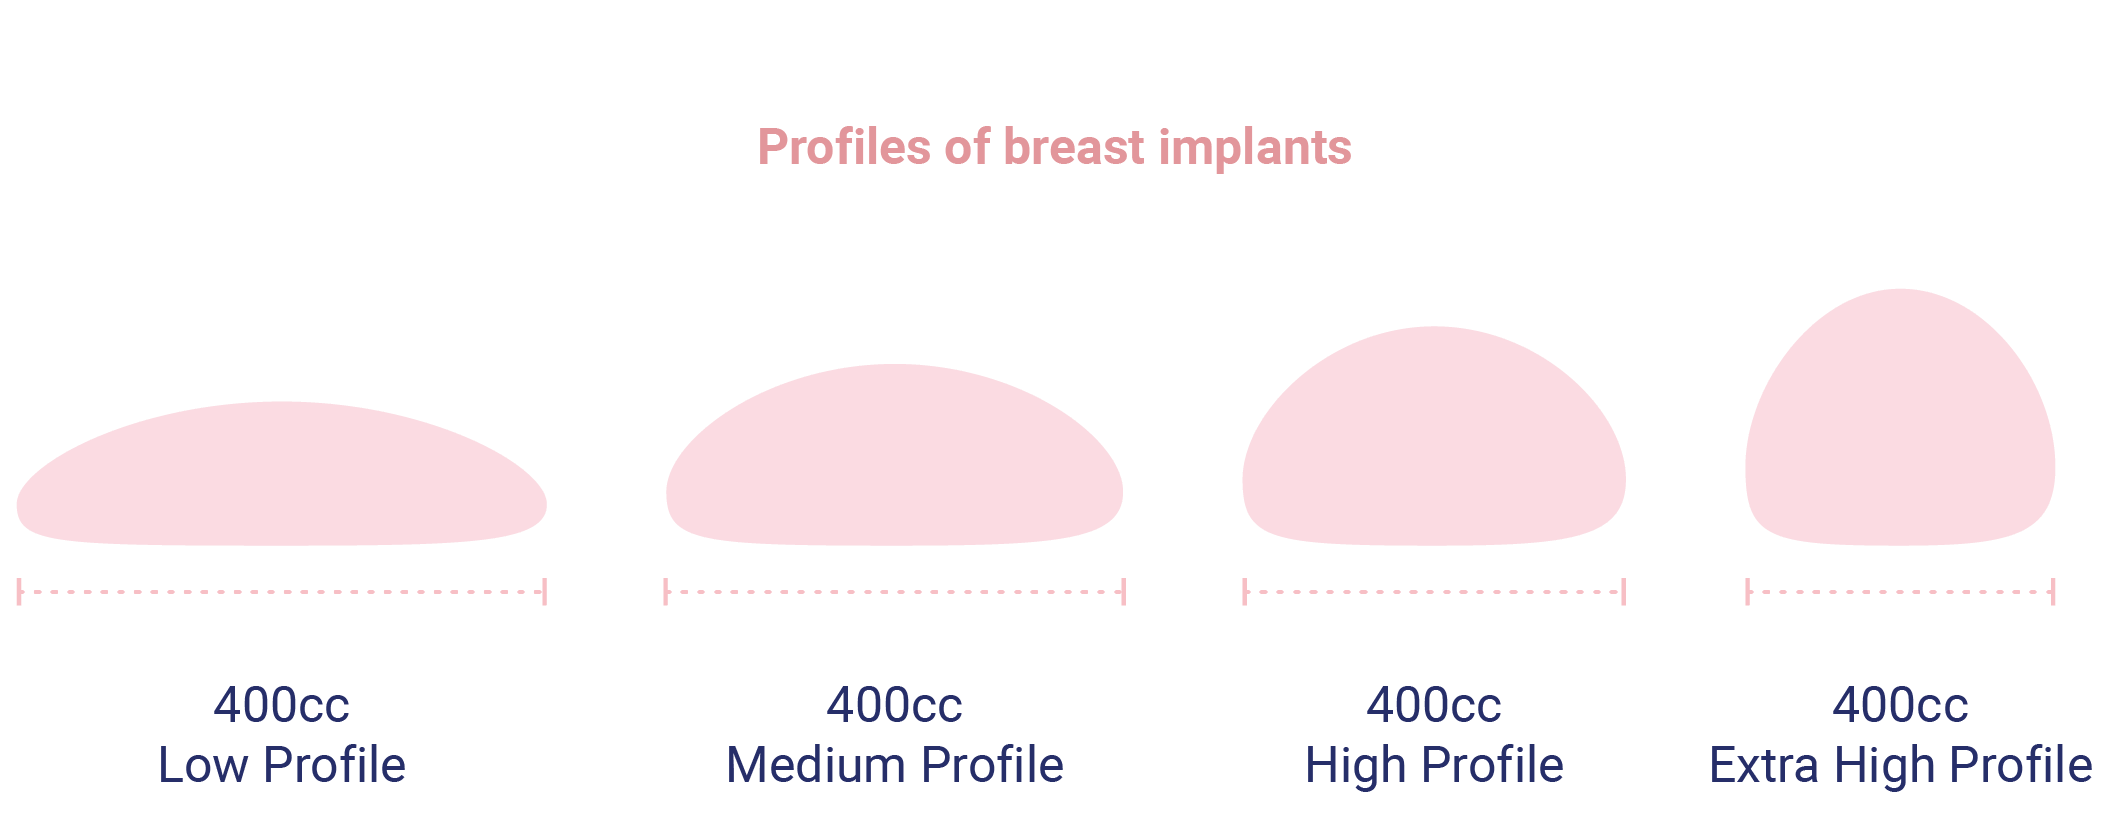 Choosing a breast implant profile